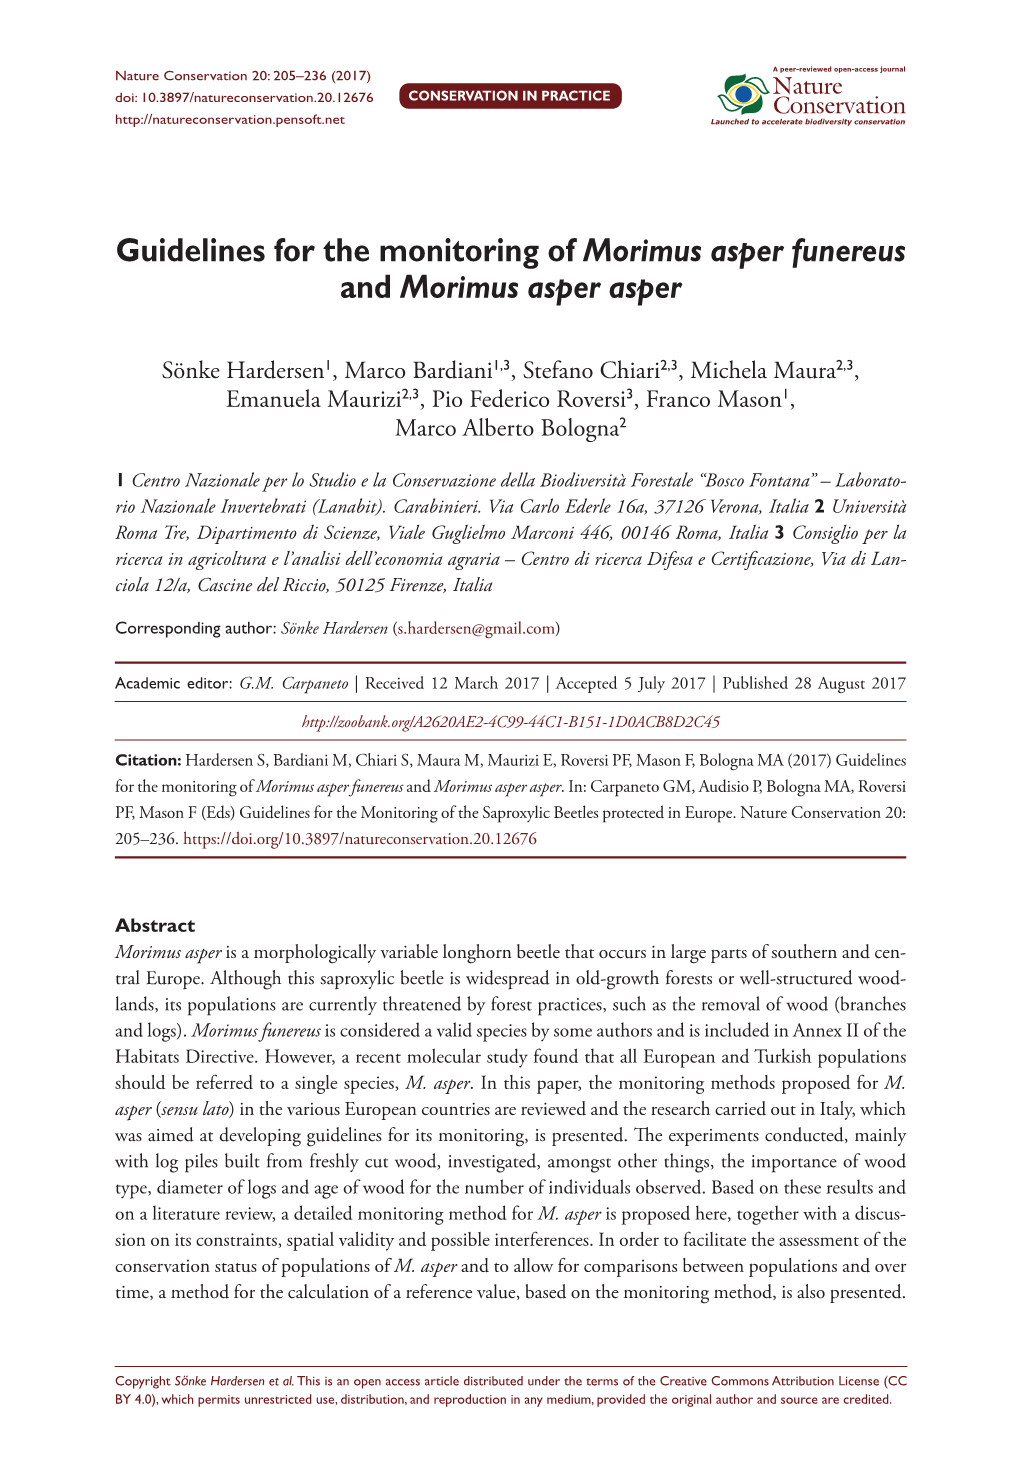 Guidelines for the Monitoring of Morimus Asper Funereus and Morimus Asper Asper